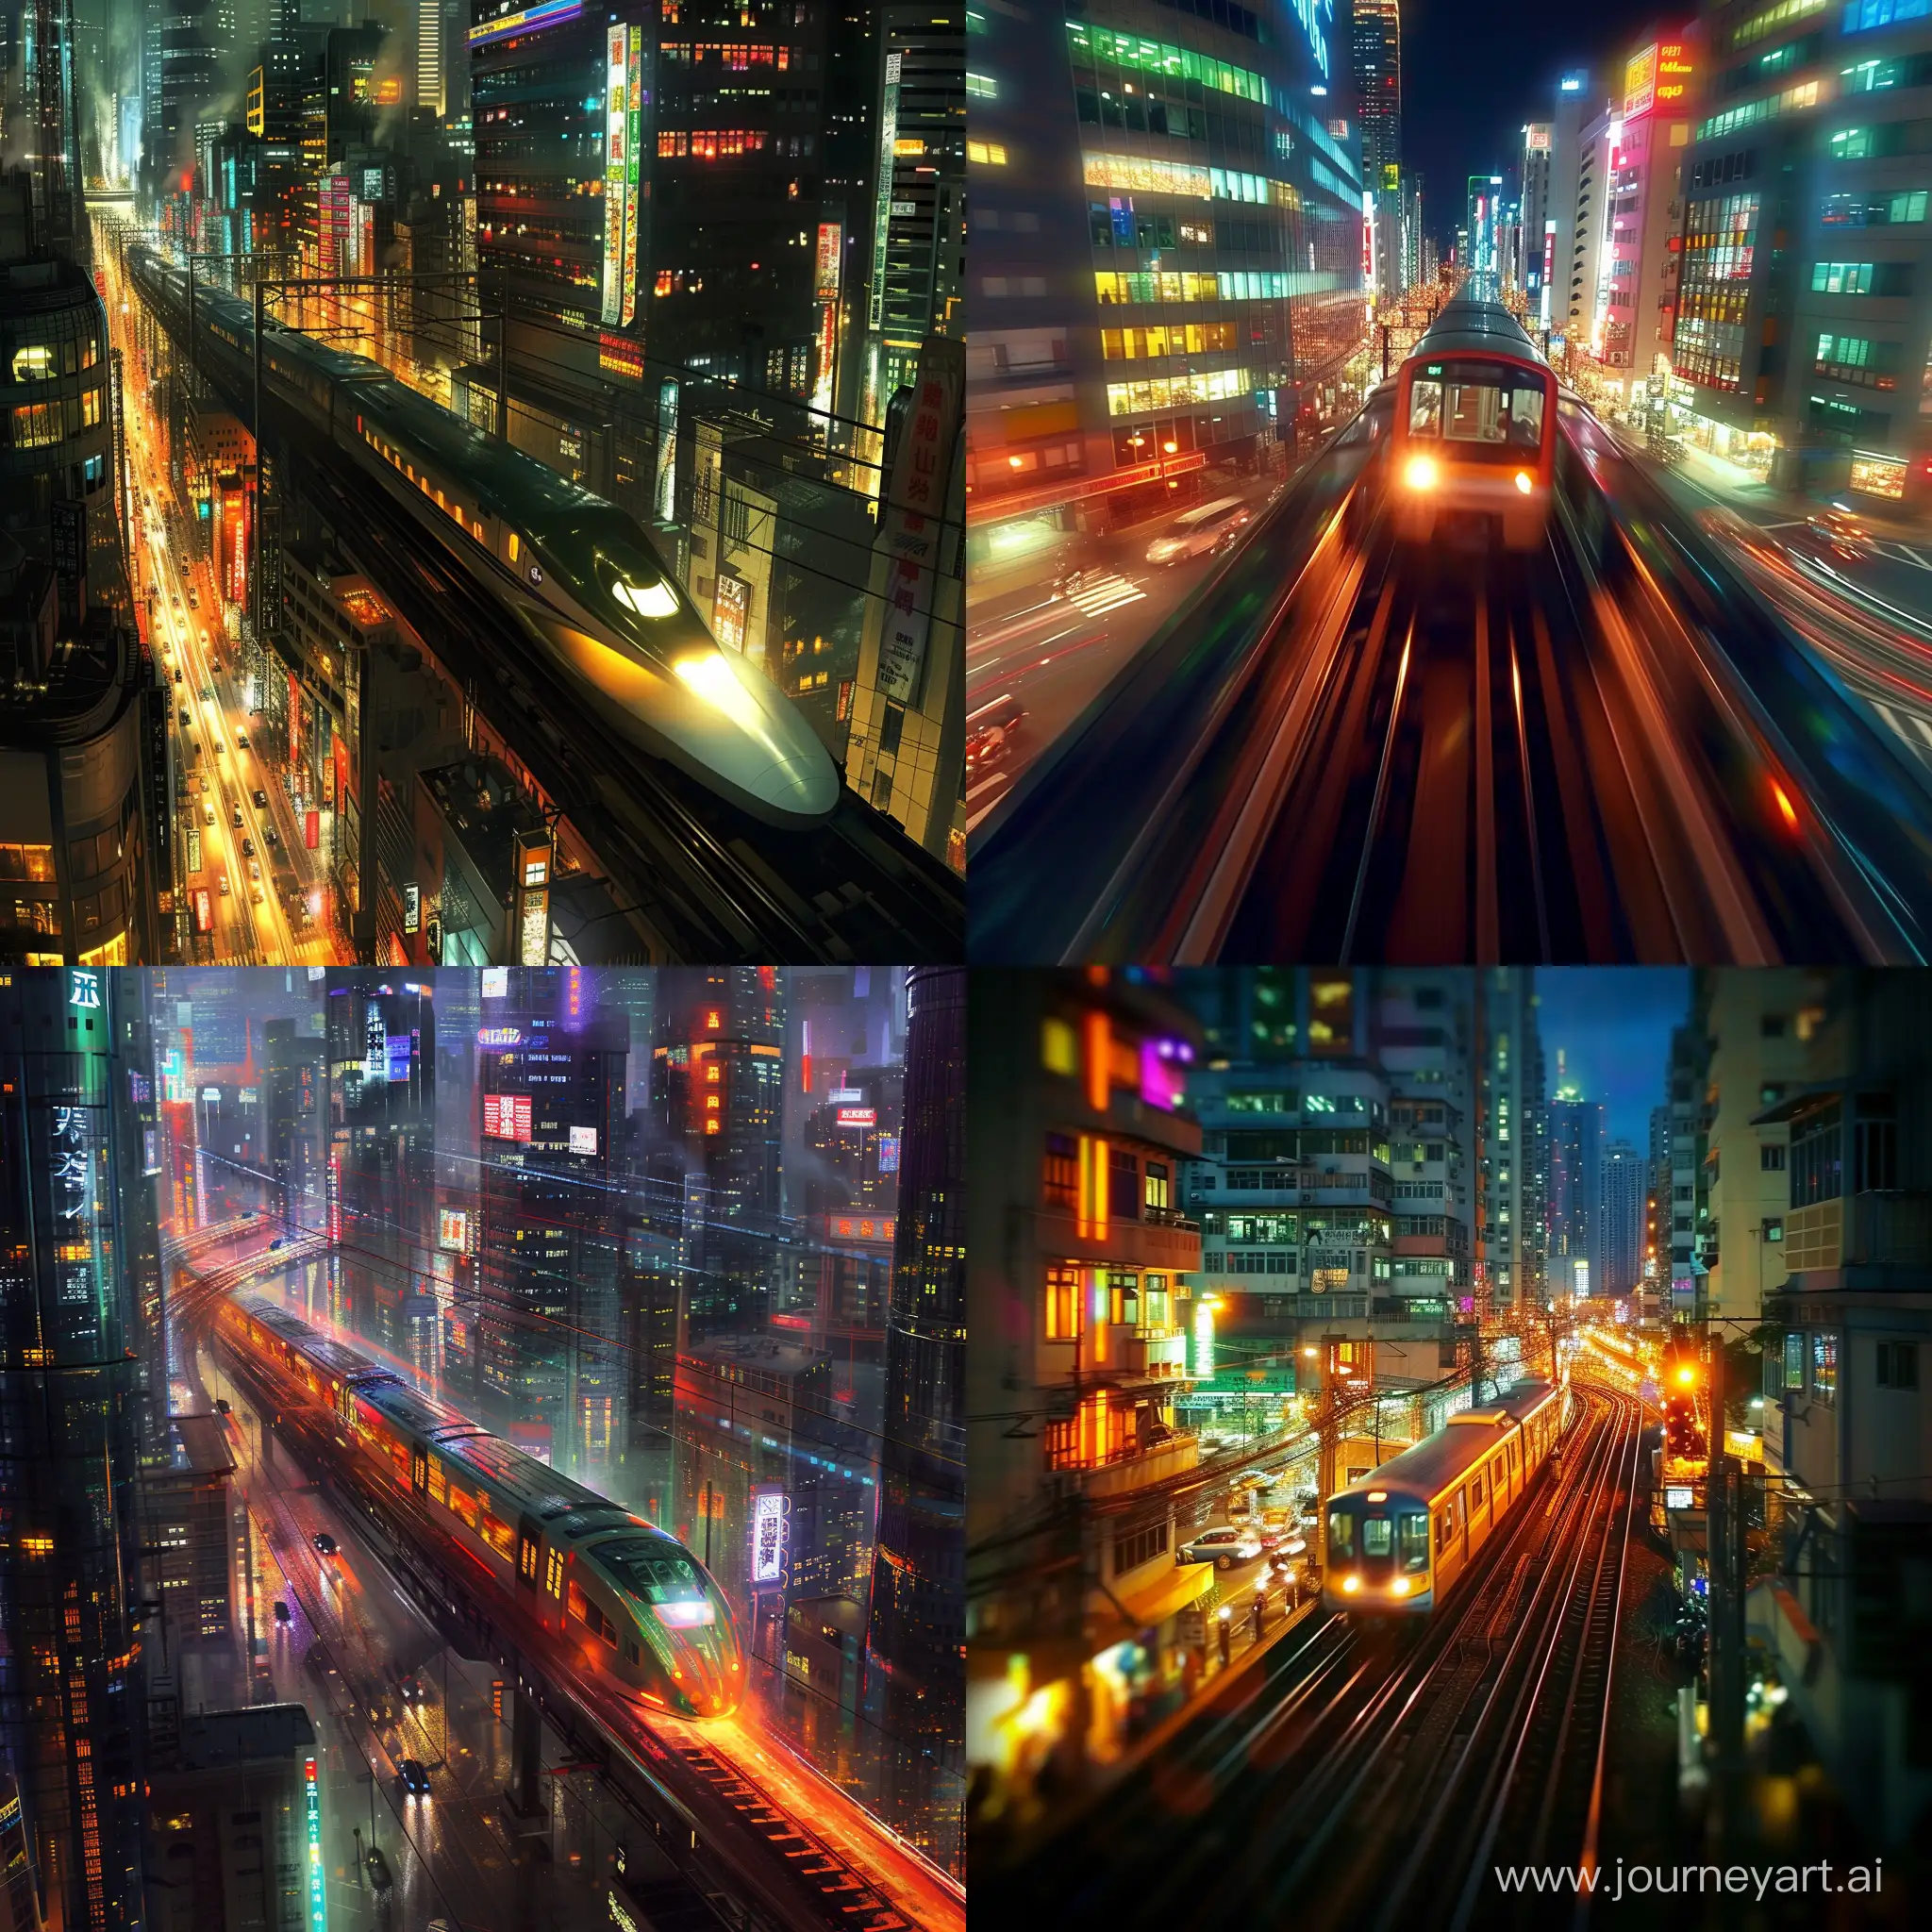 Dynamic-Urban-Night-Train-Scene-with-Colorful-Lights